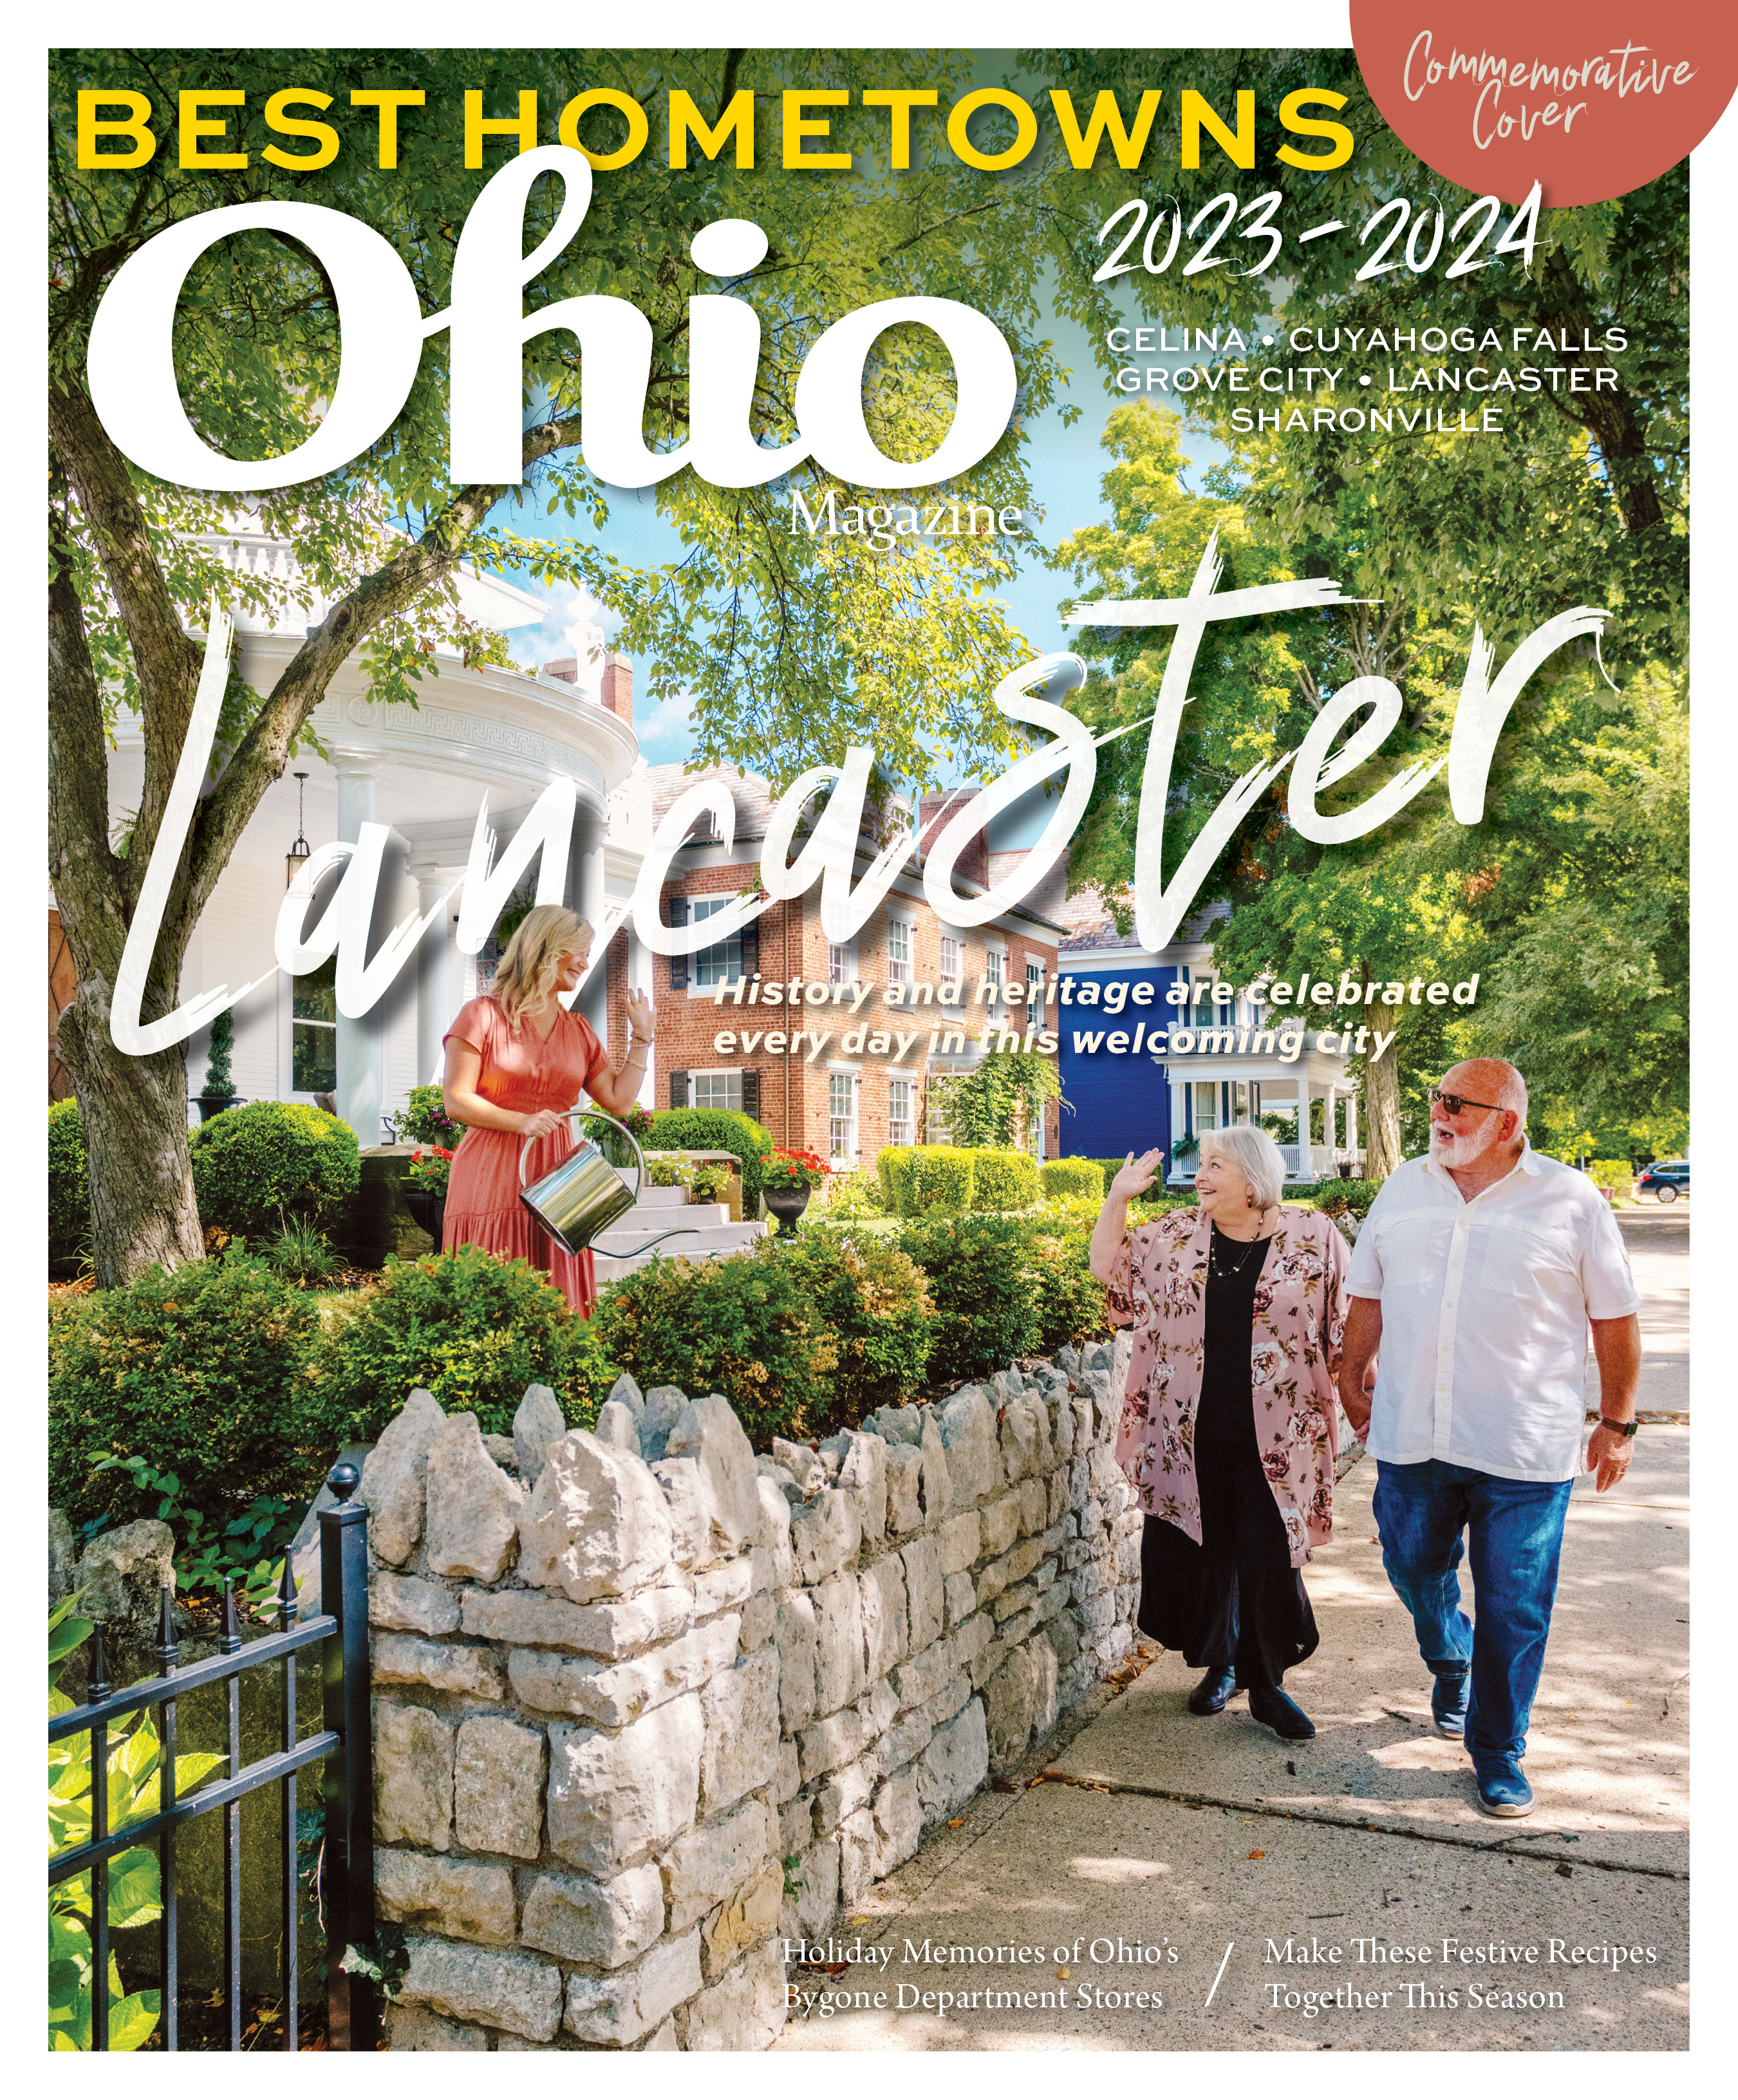 Best Hometowns 2023: Lancaster Cover